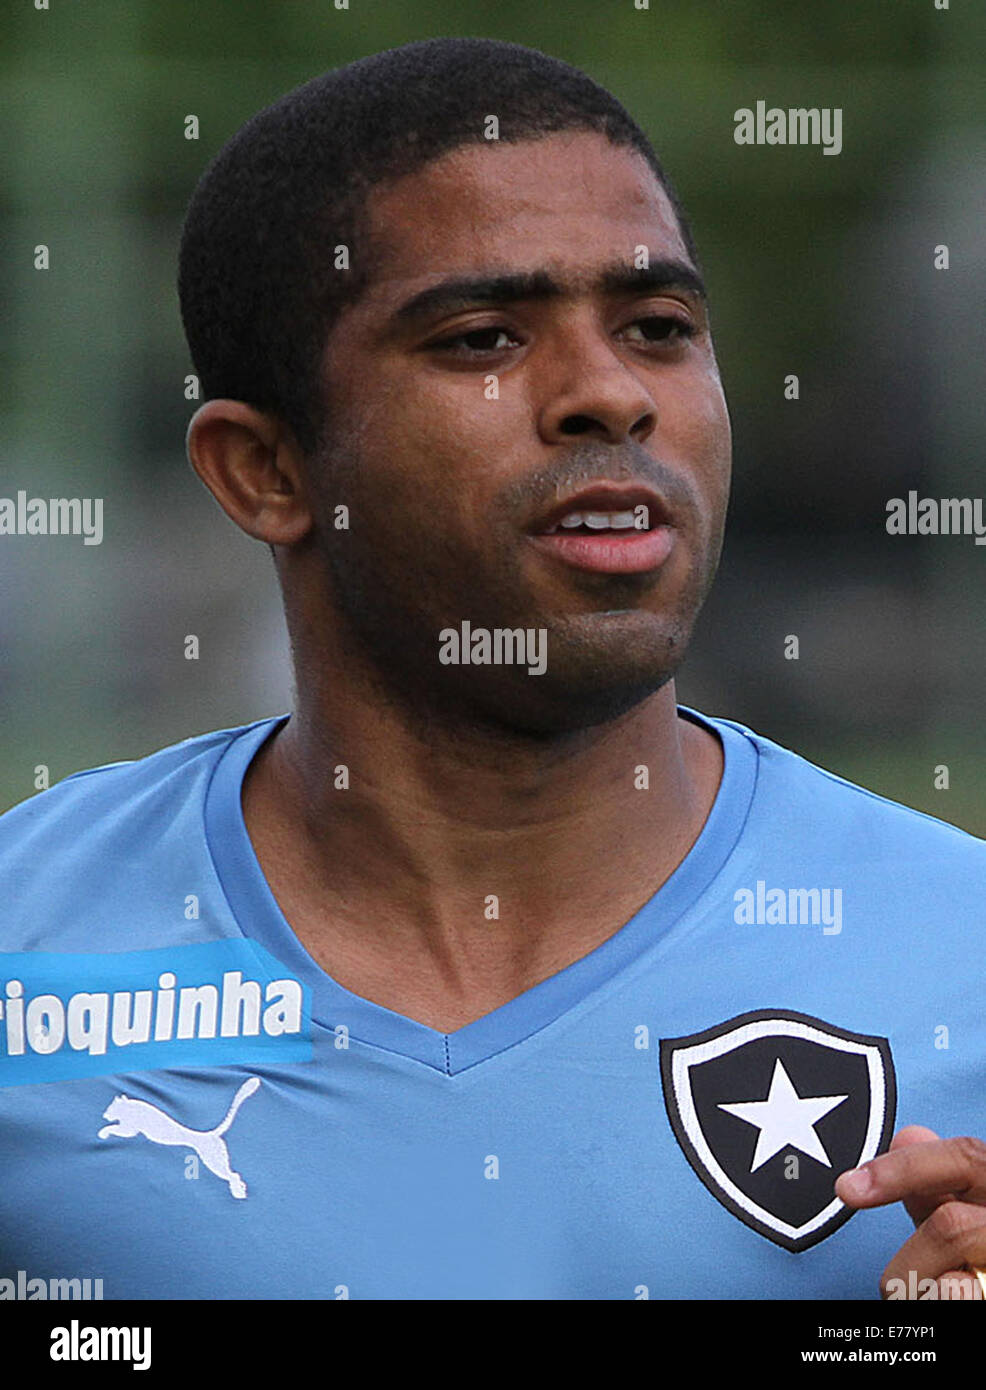 Brazilian Football League Serie A / ( Botafogo de Futebol e Regatas ) - Junior Cesar - brazilian-football-league-serie-a-botafogo-de-futebol-e-regatas-junior-E77YP1